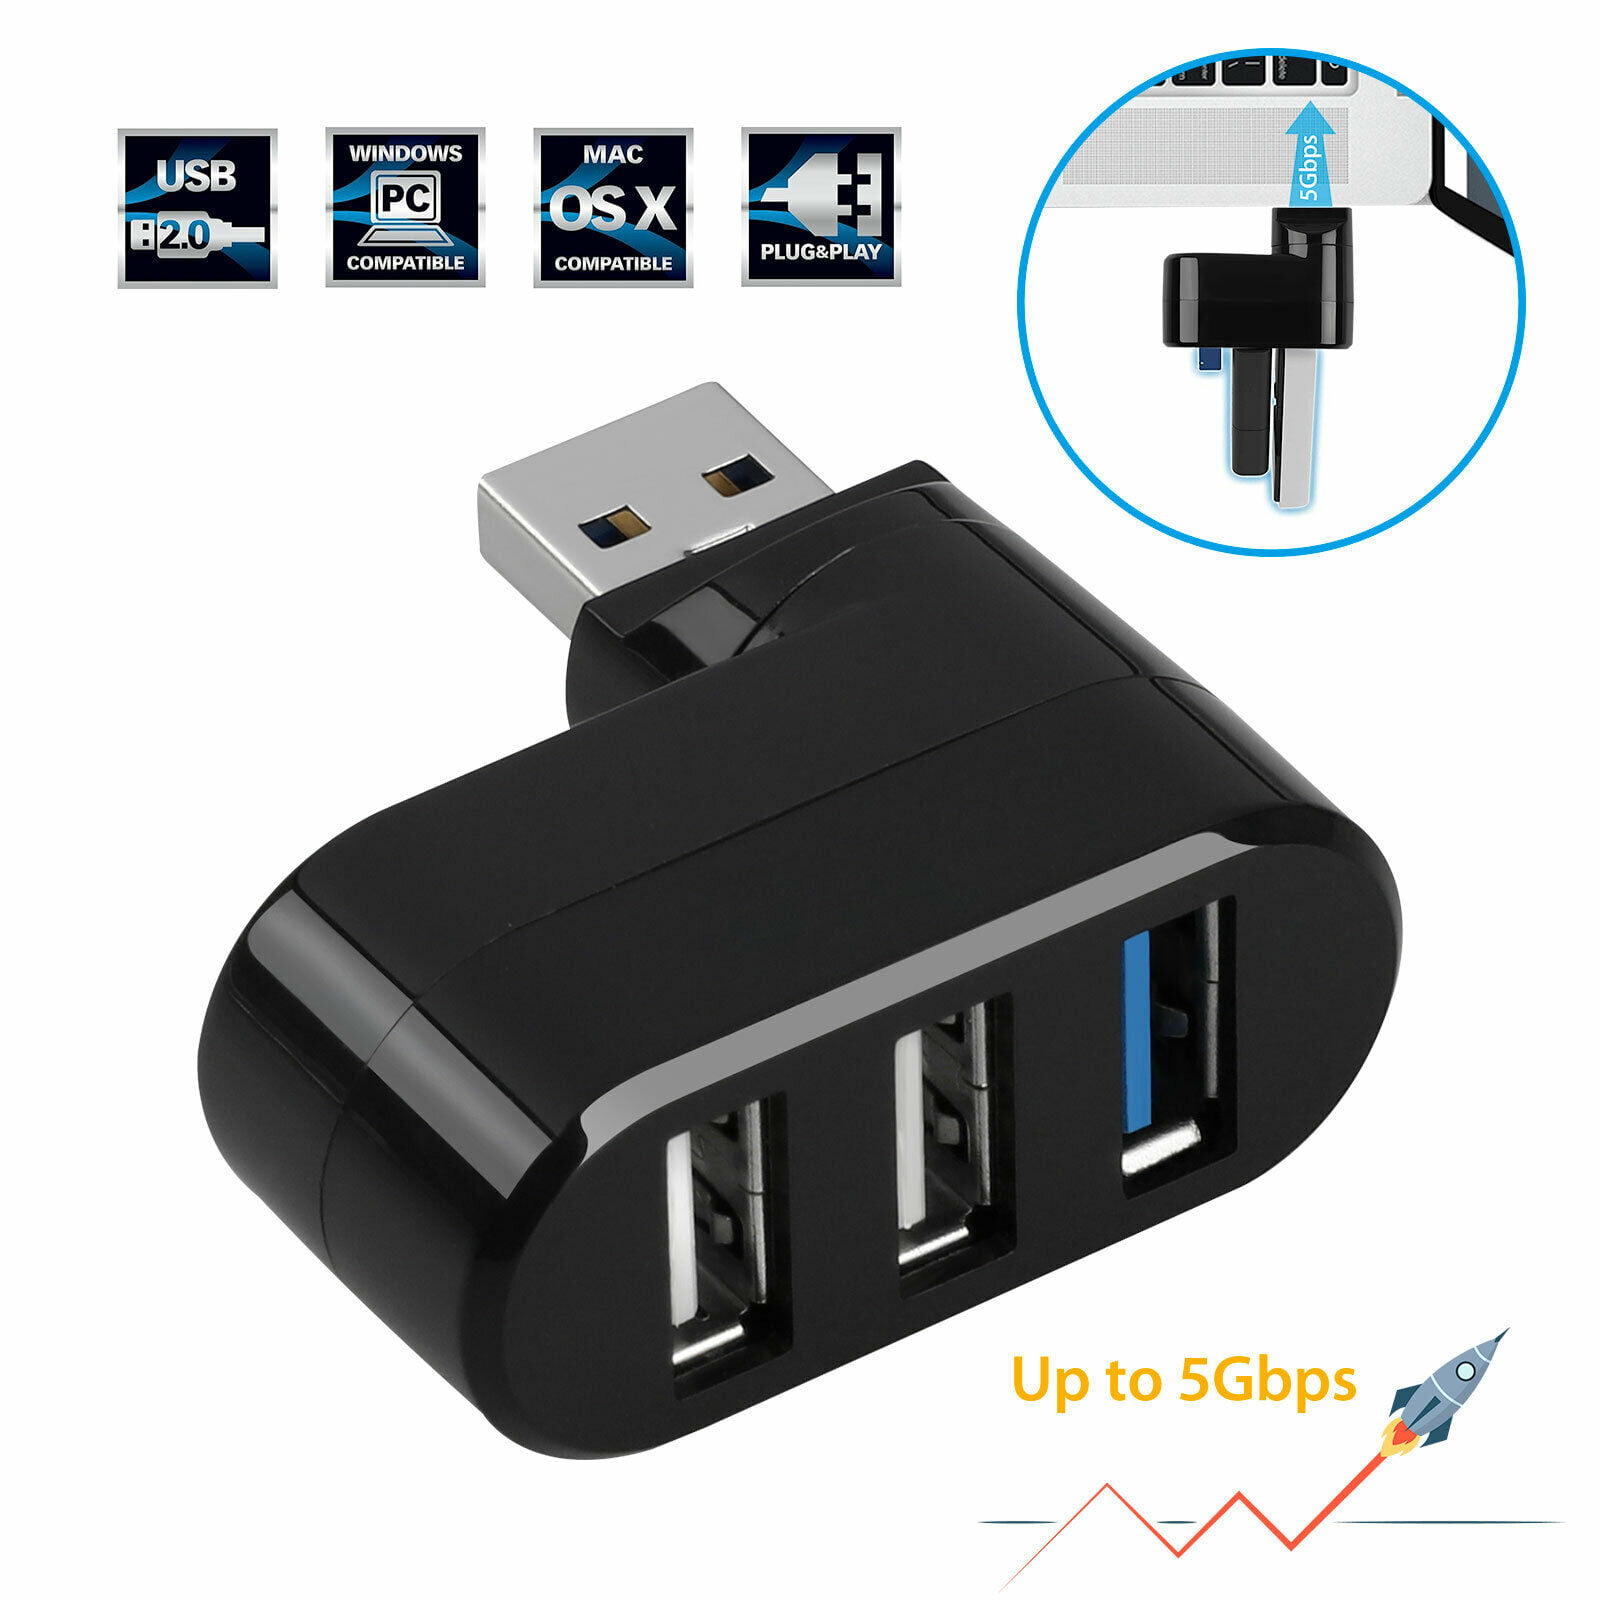 New USB 2.0 4 Port Hub High Speed Splitter Cable Adapter for Laptop Black B5P5 